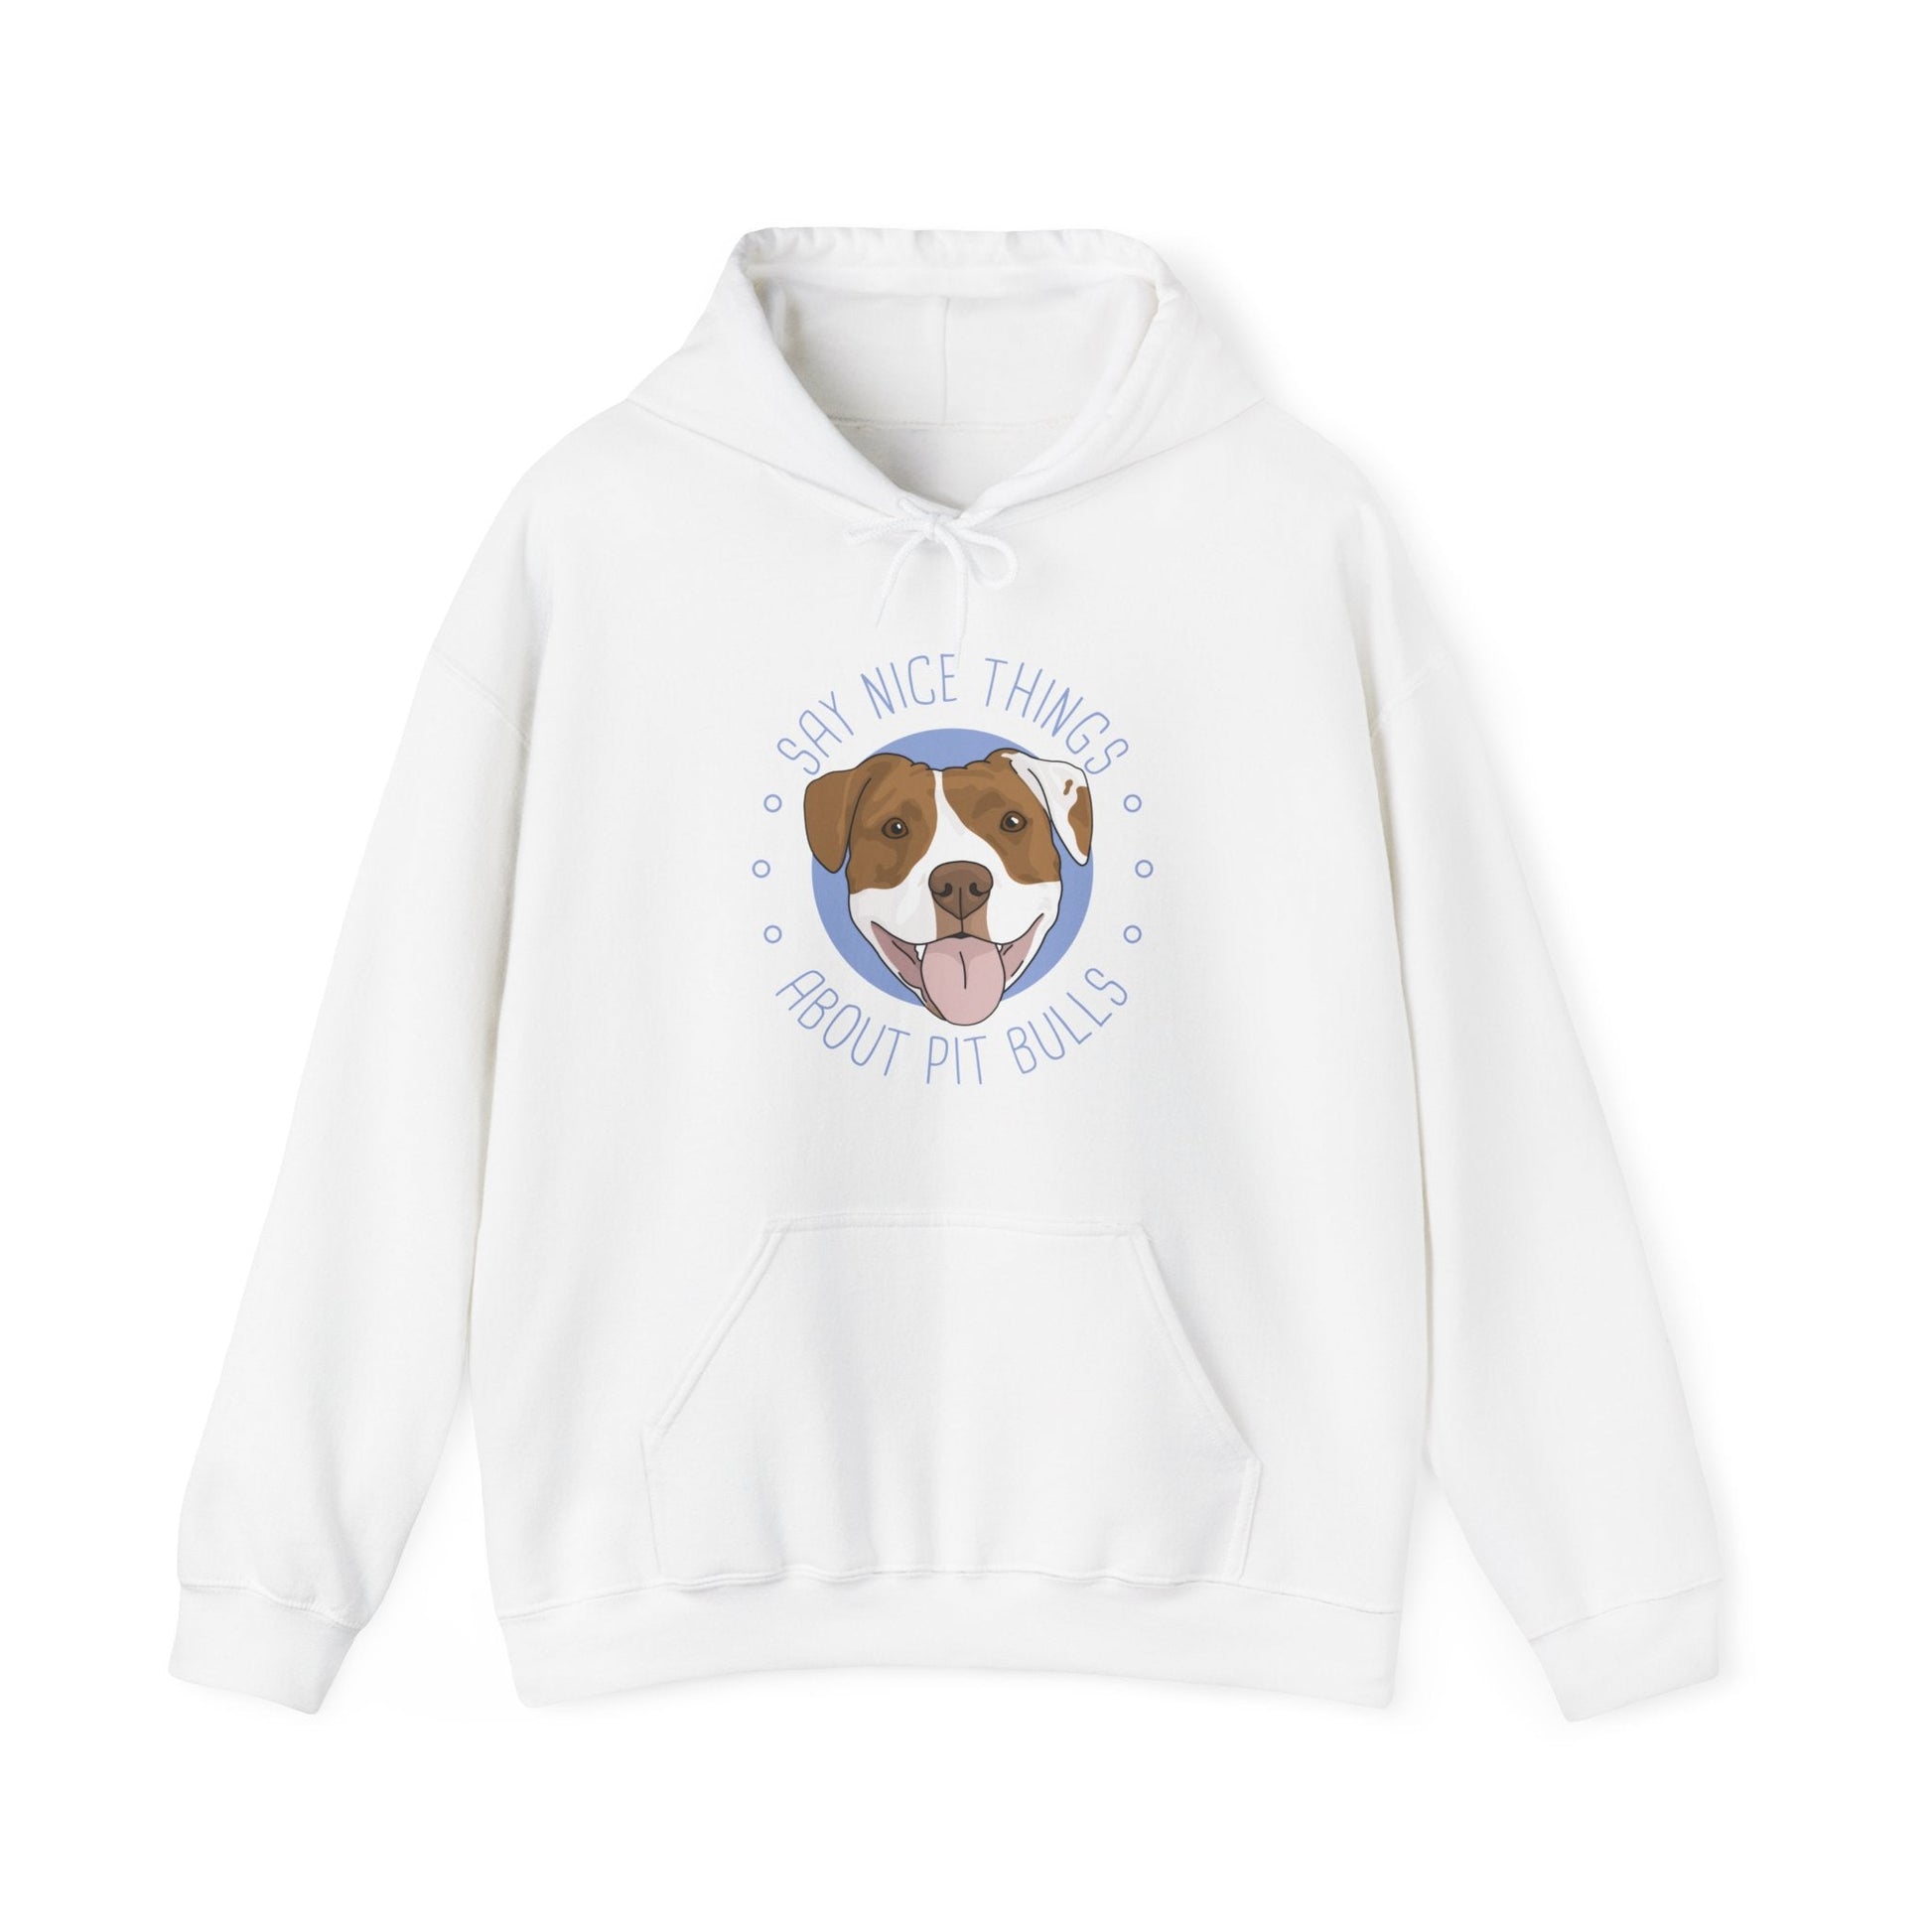 Say Nice Things About Pit Bulls | Hooded Sweatshirt - Detezi Designs-14313685637614611402